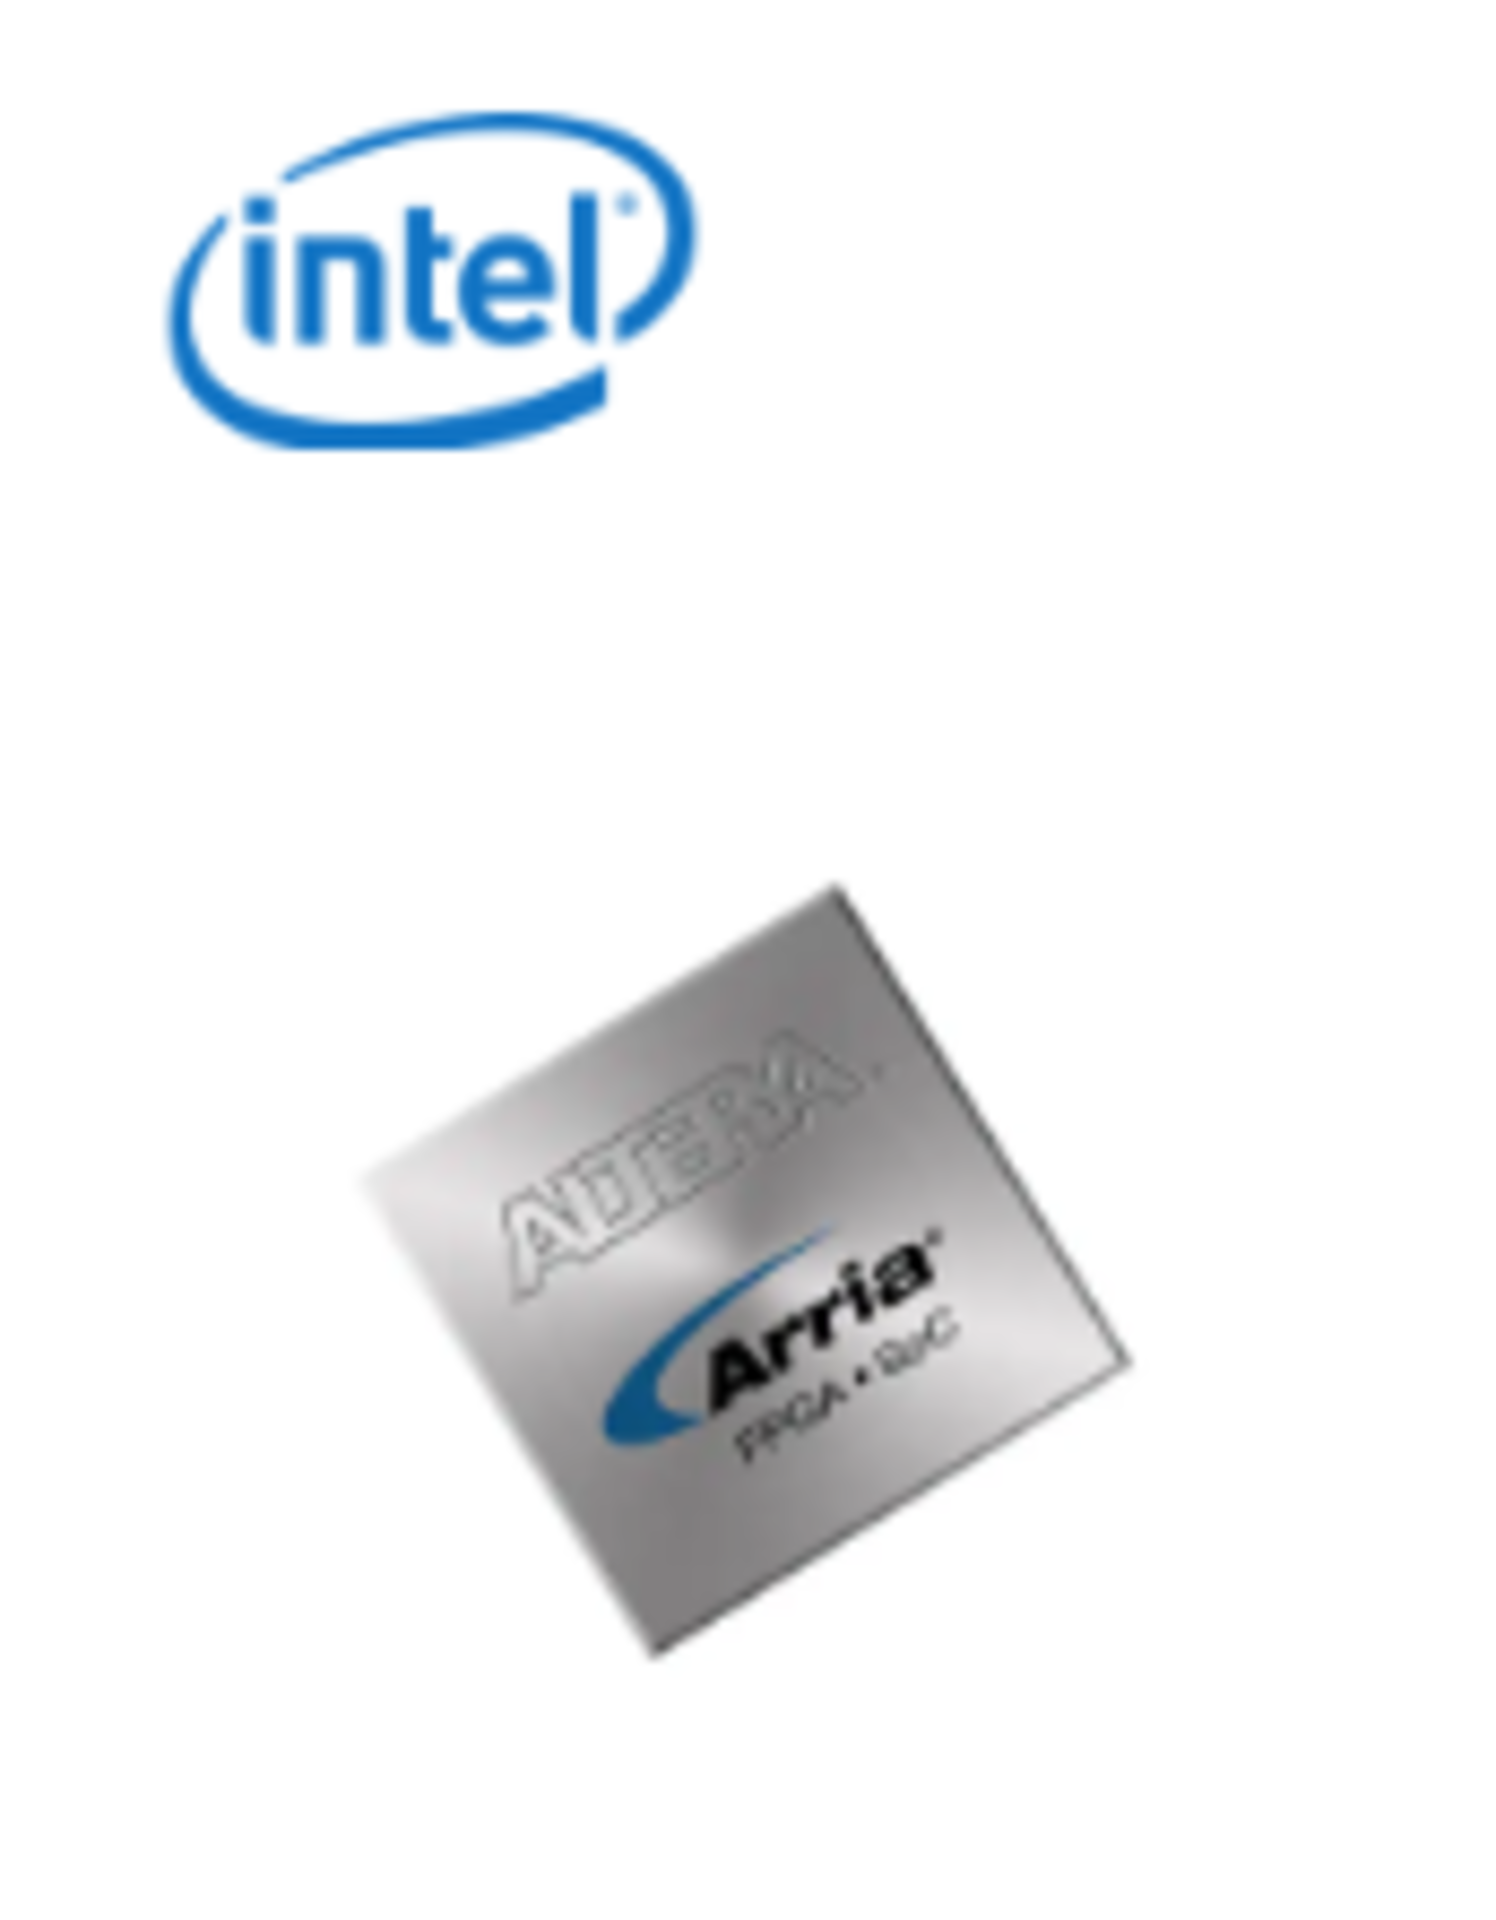 Intel 10AX115N4F45E3SG, QTY 2, FPGA Arria 10 GX Family 1150000 Cells 20nm Technology 0.9V